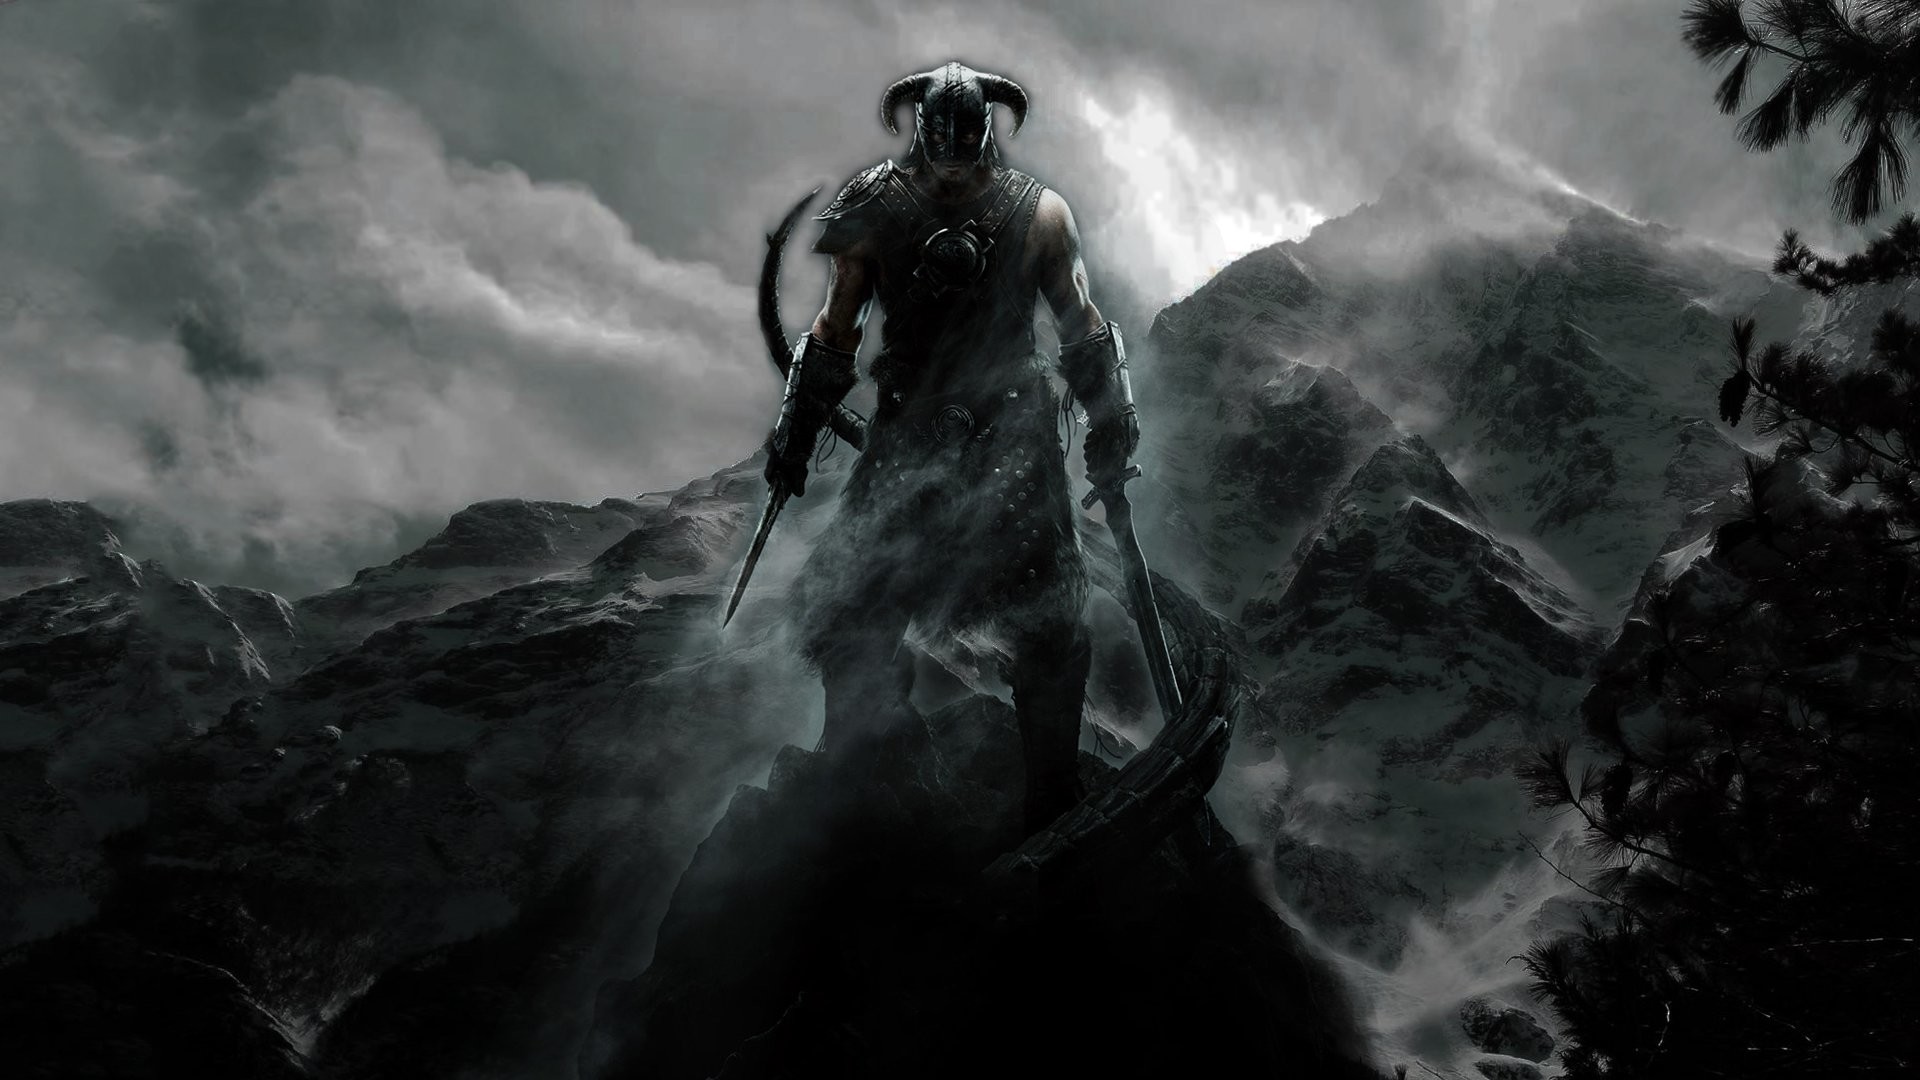 The Elder Scrolls Skyrim Dragonborn Wallpaper | Fans Share